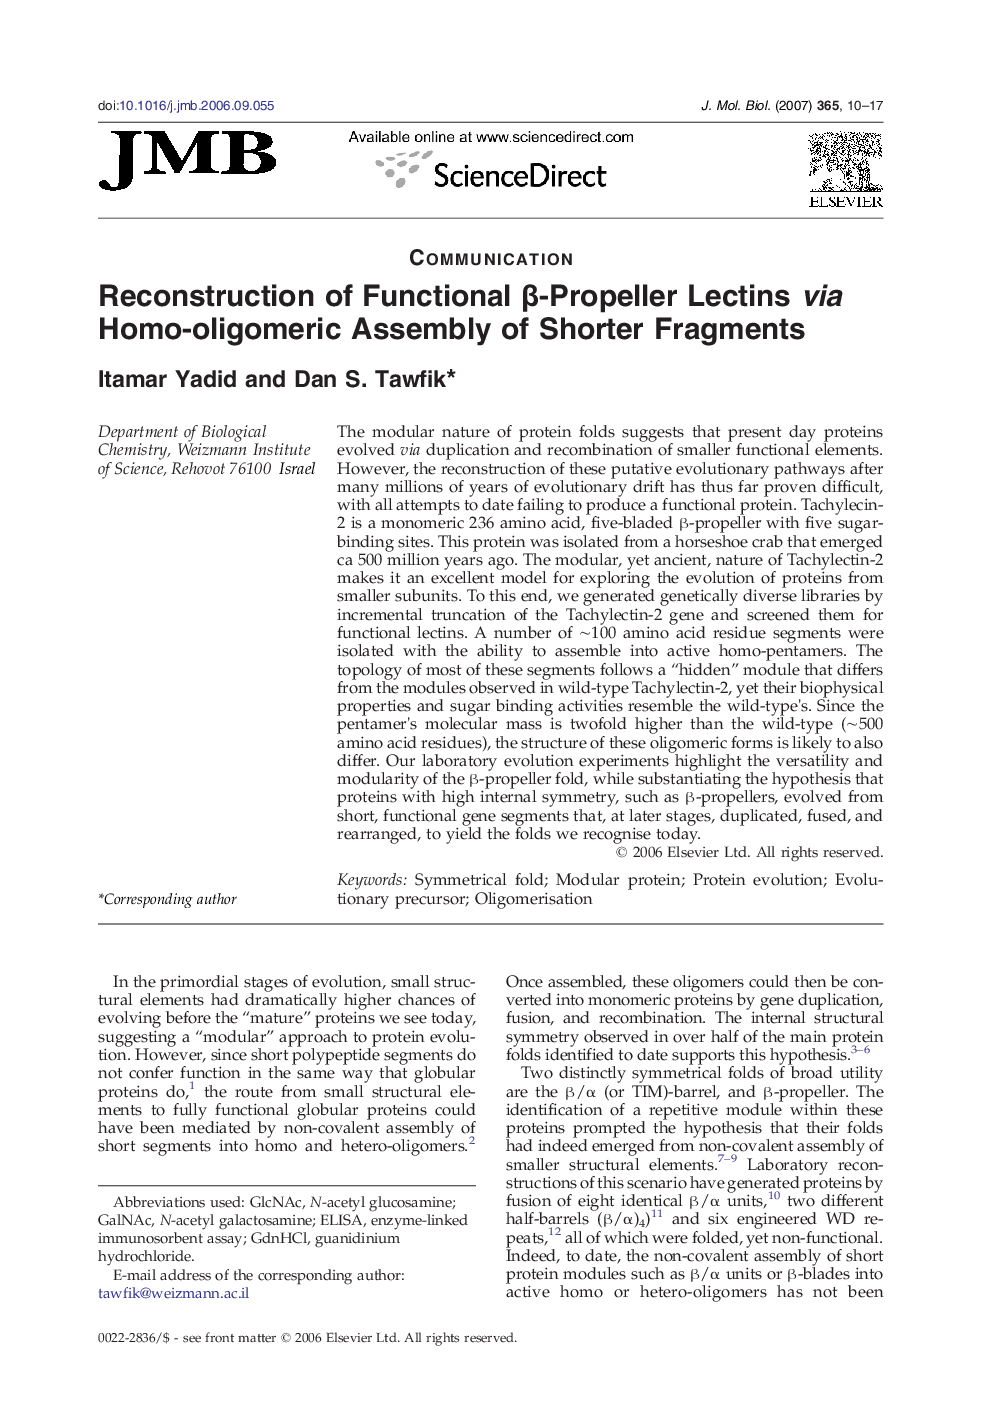 Reconstruction of Functional β-Propeller Lectins via Homo-oligomeric Assembly of Shorter Fragments